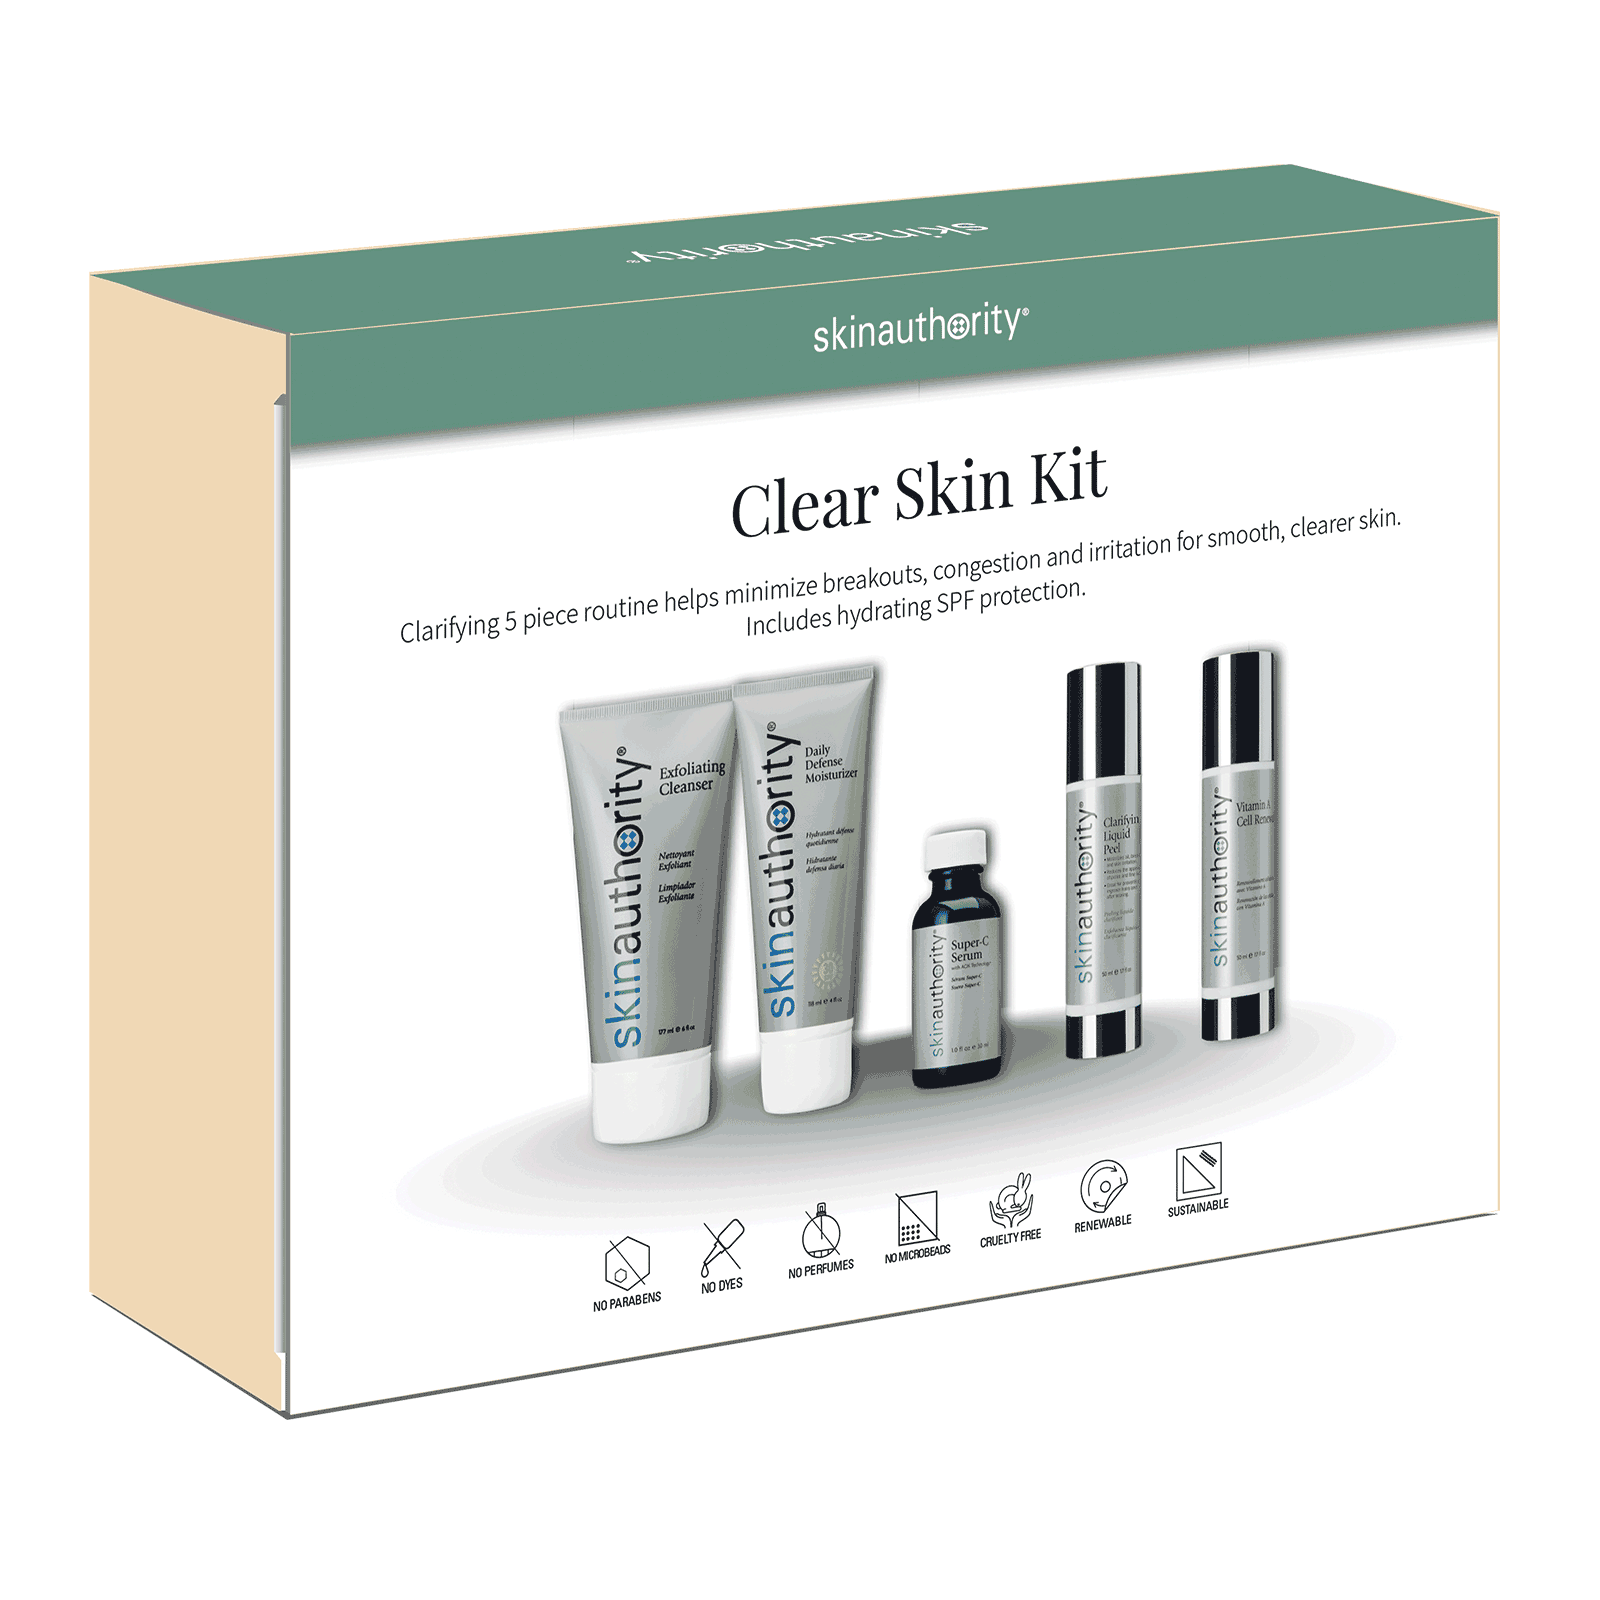 Clear Skin Kit Box